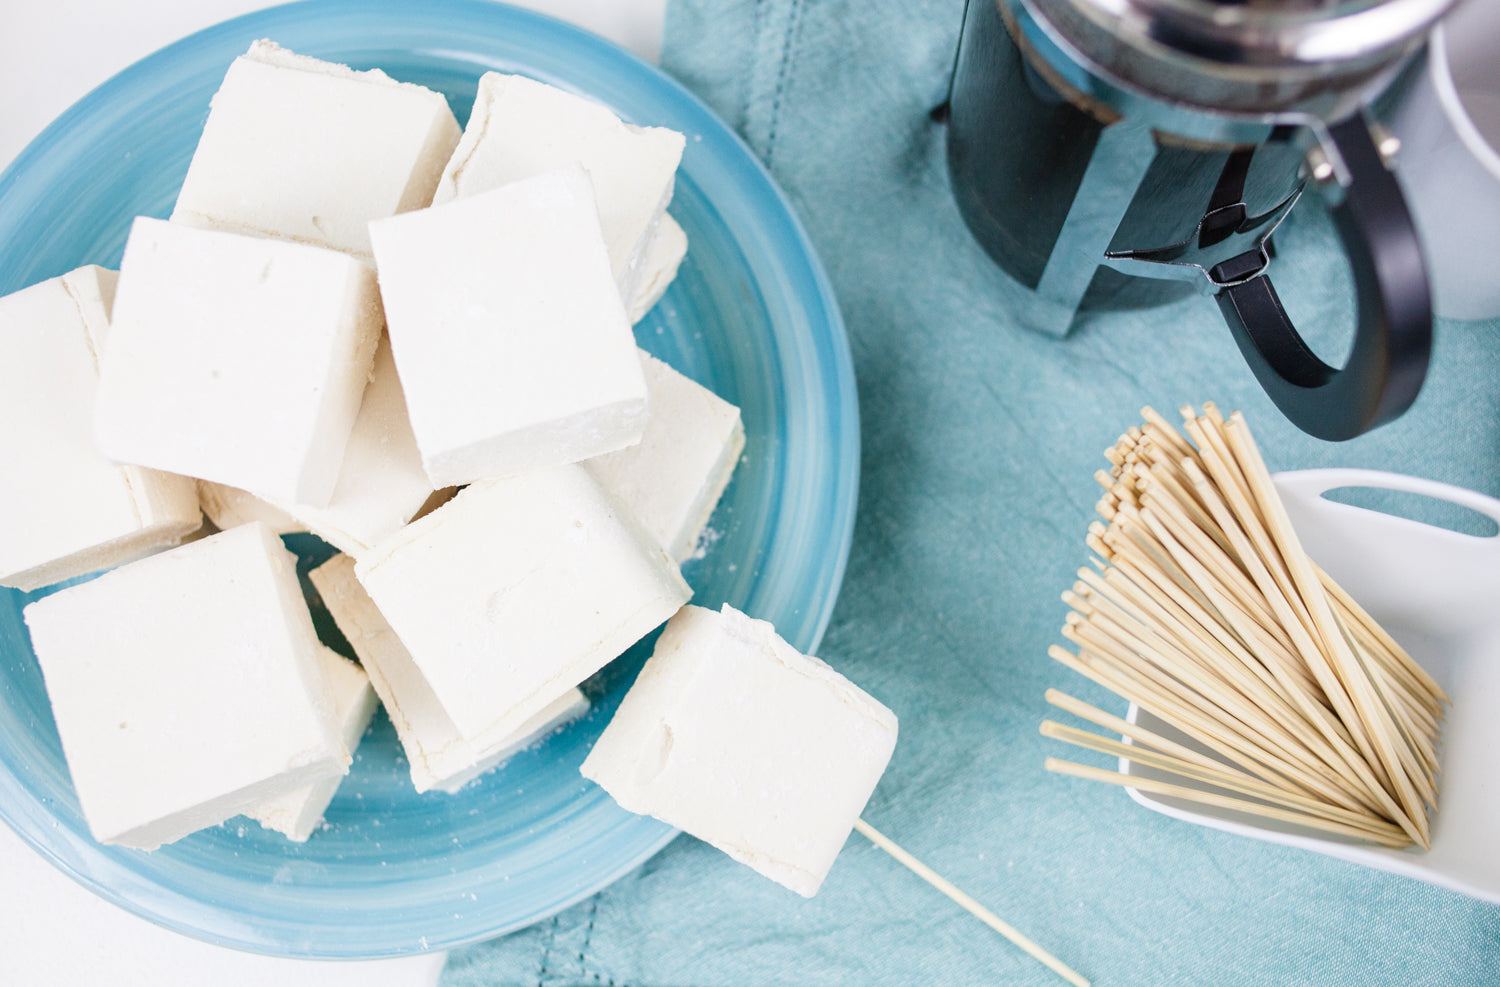 DIY marshmallow recipe for toasting